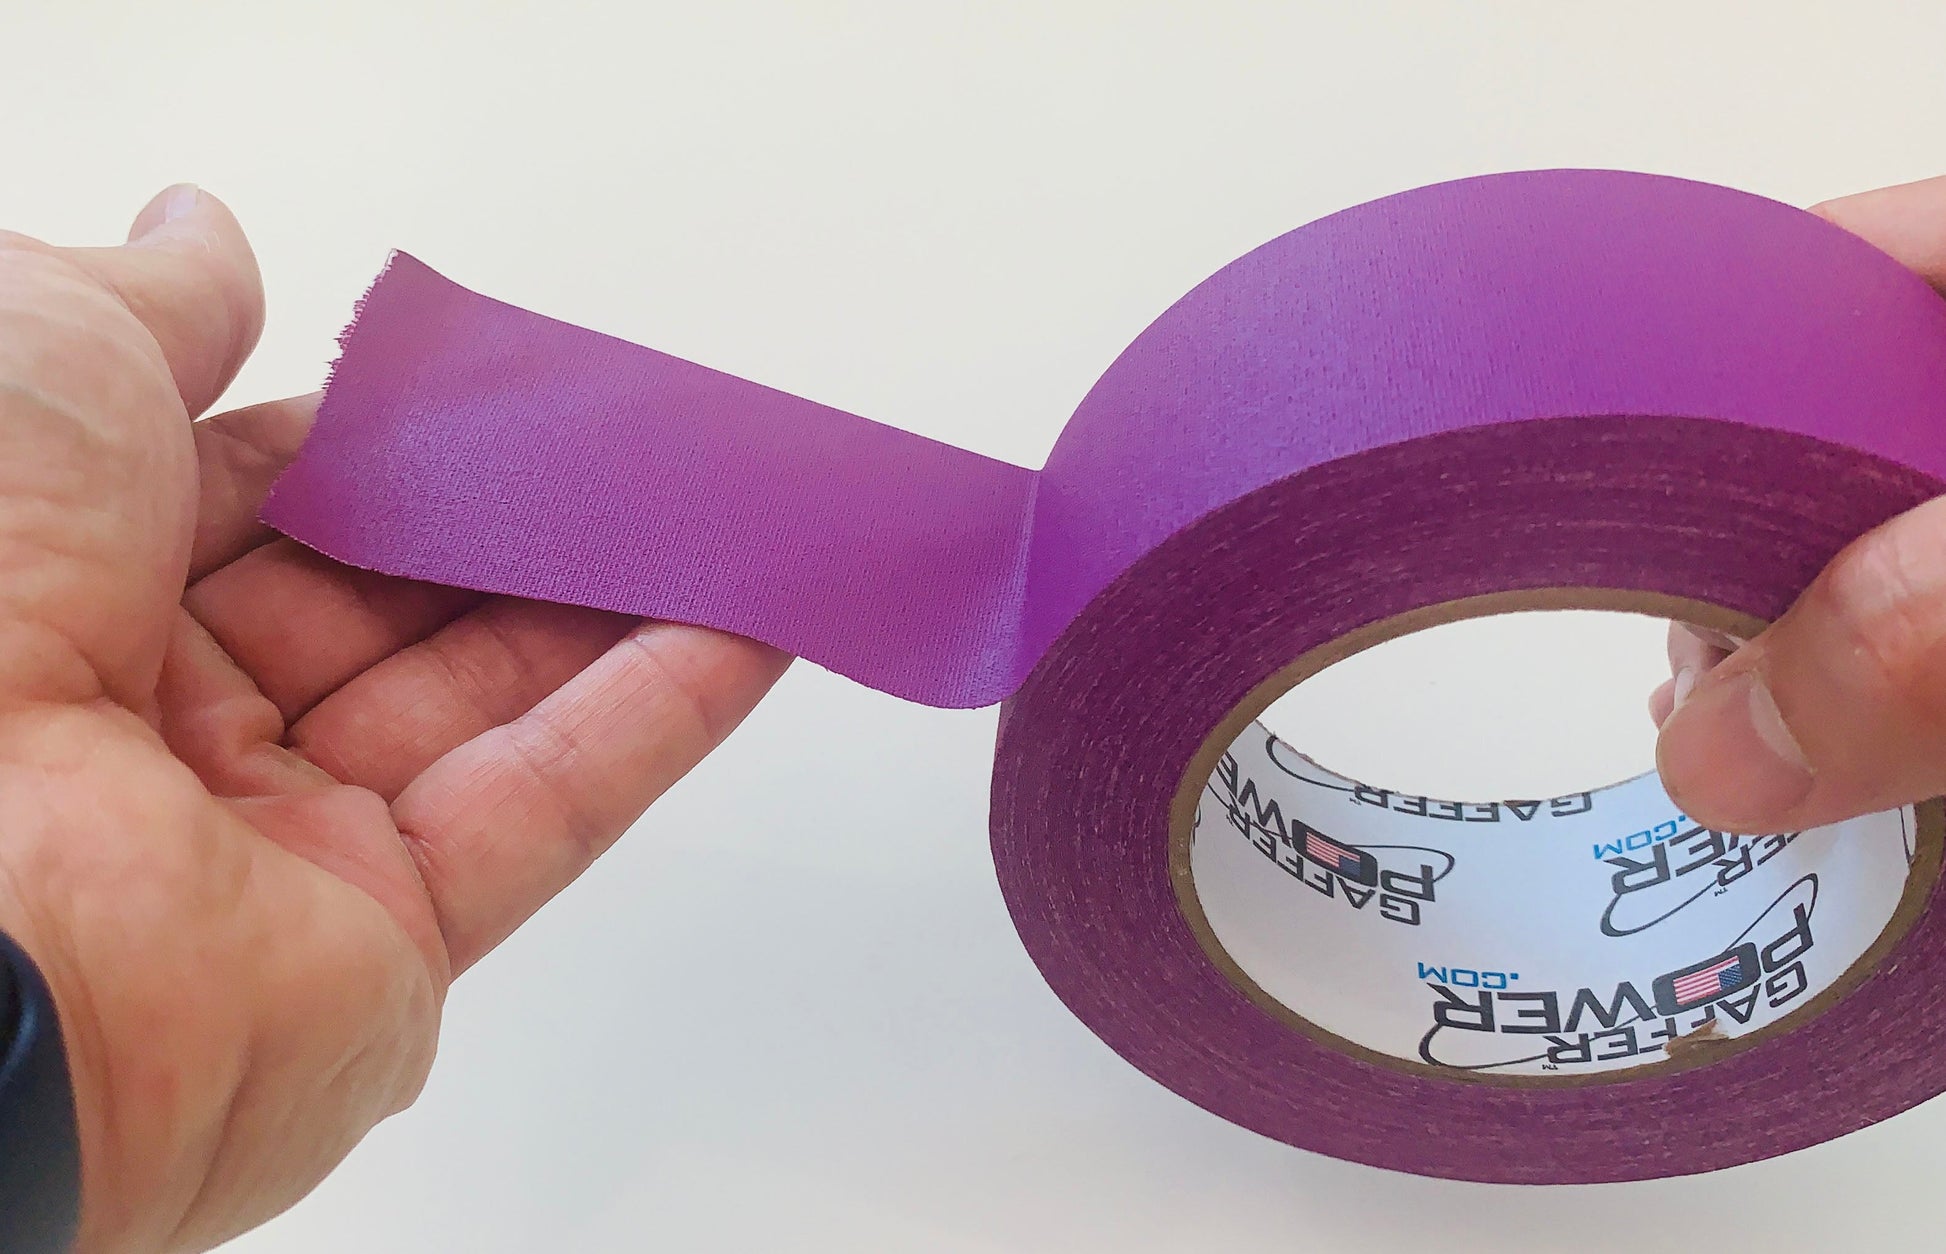 Binding Tape ( Duct Tape ) 2'' x 10 Yards - Purple Colour - 1pcs